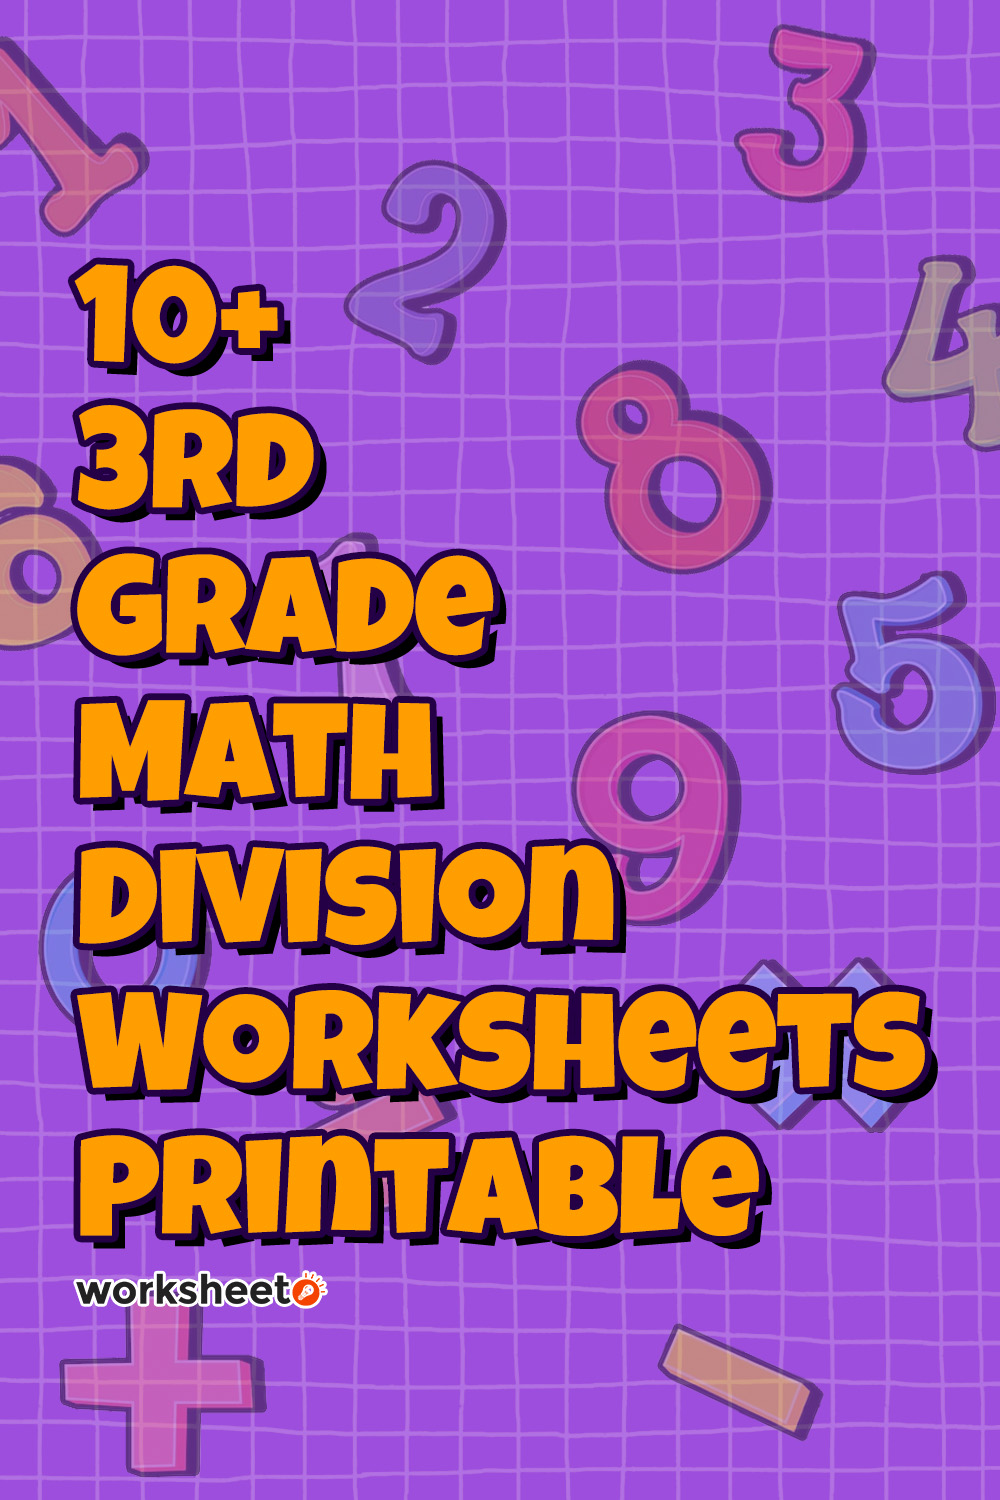 3rd Grade Math Division Worksheets Printable